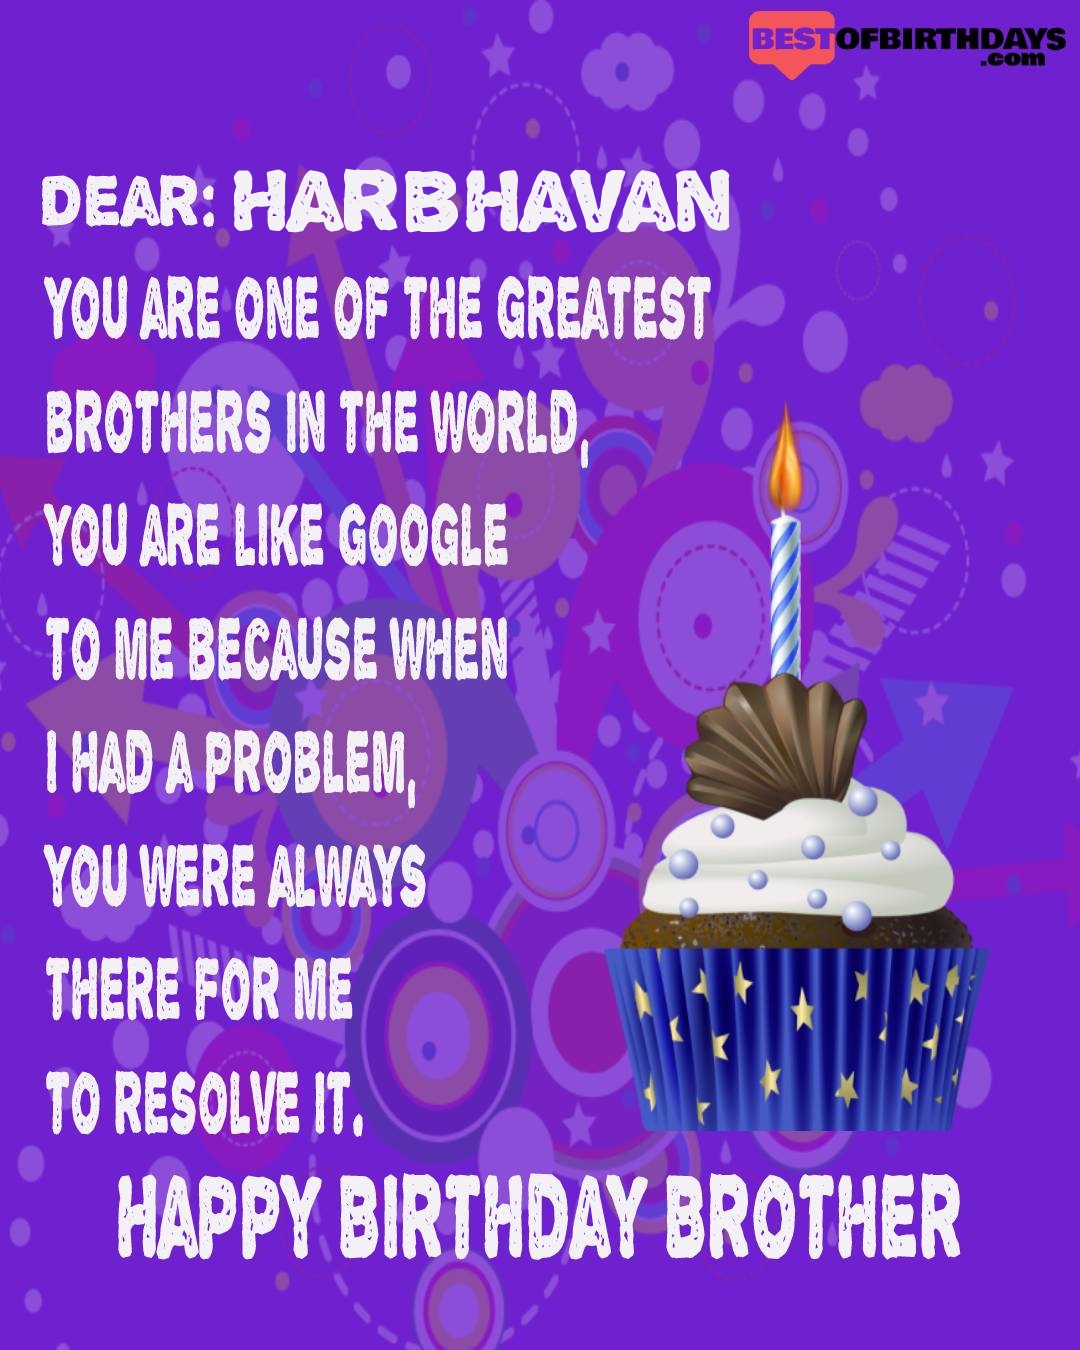 Happy birthday harbhavan bhai brother bro